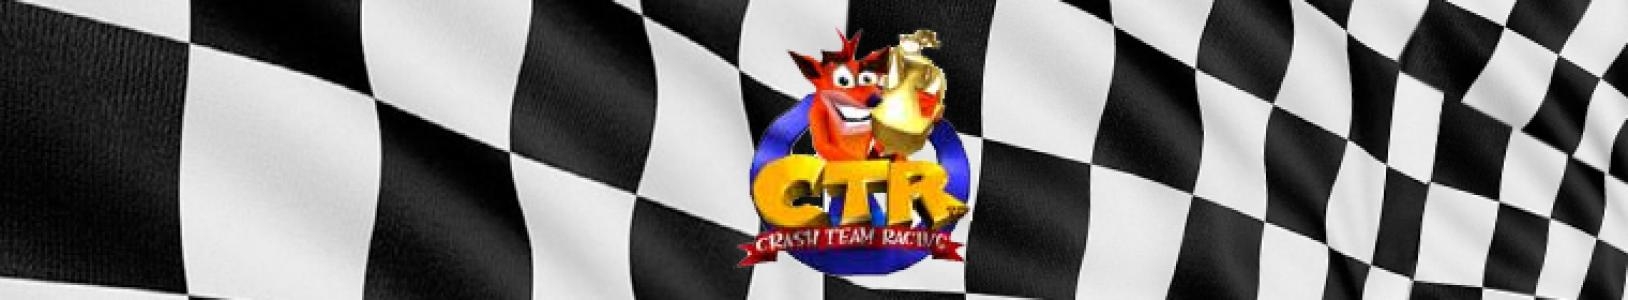 Crash Team Racing banner